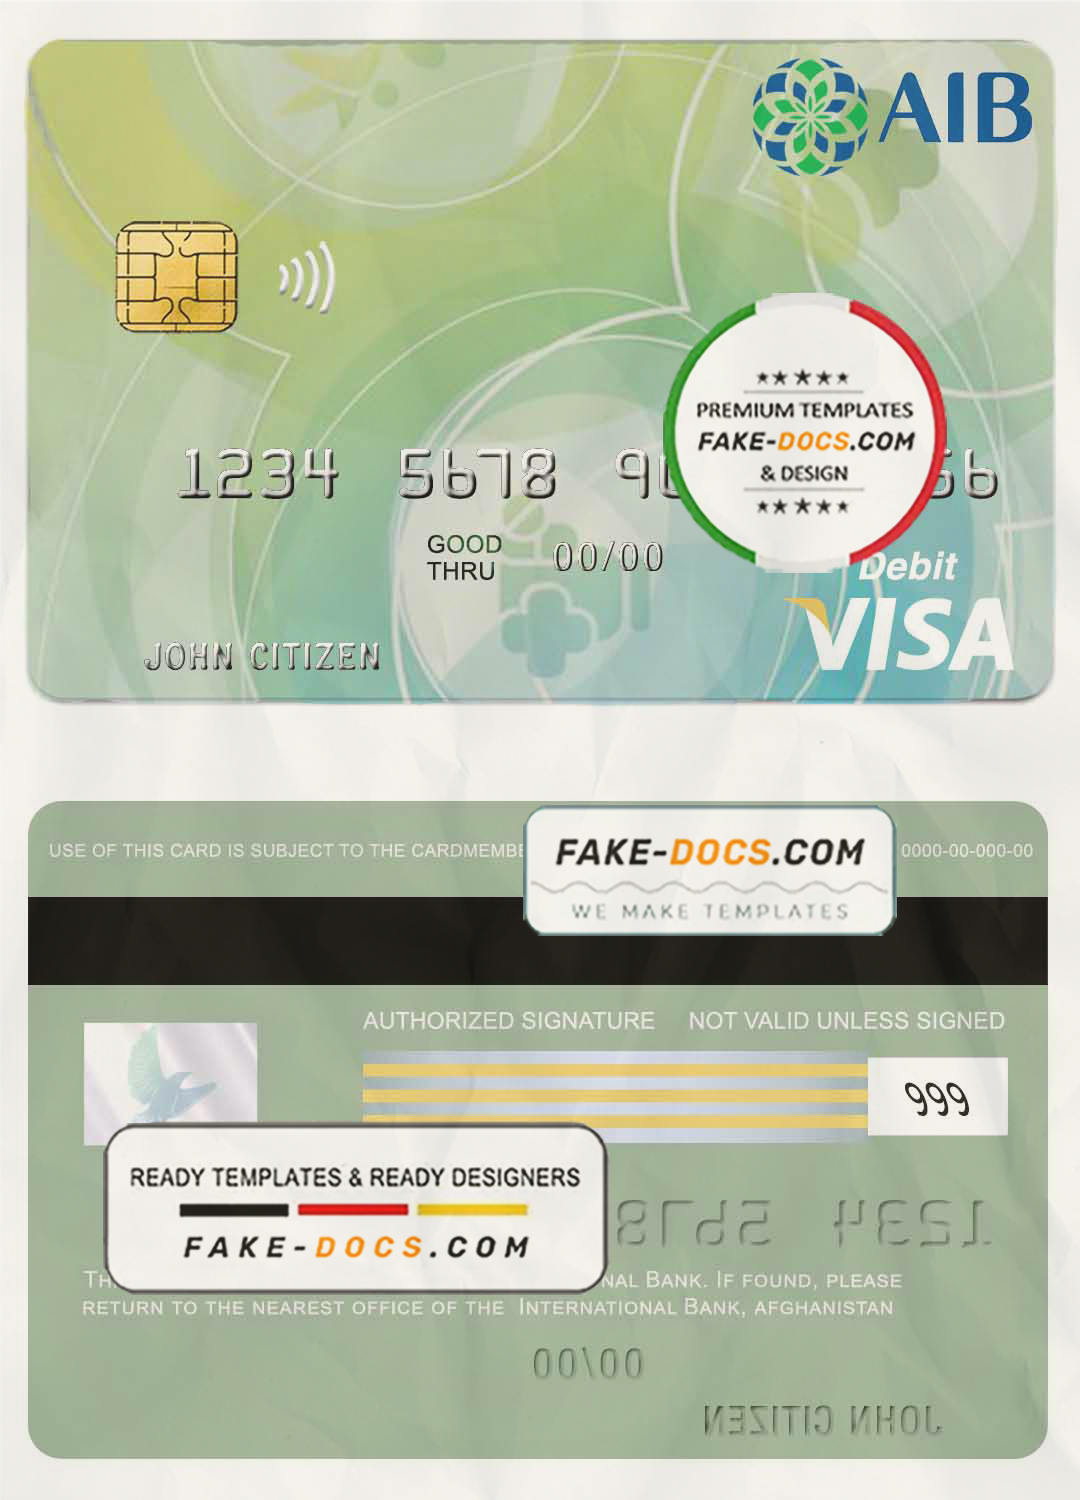 Afghanistan International Bank debit visa card template in PSD format, fully editable scan